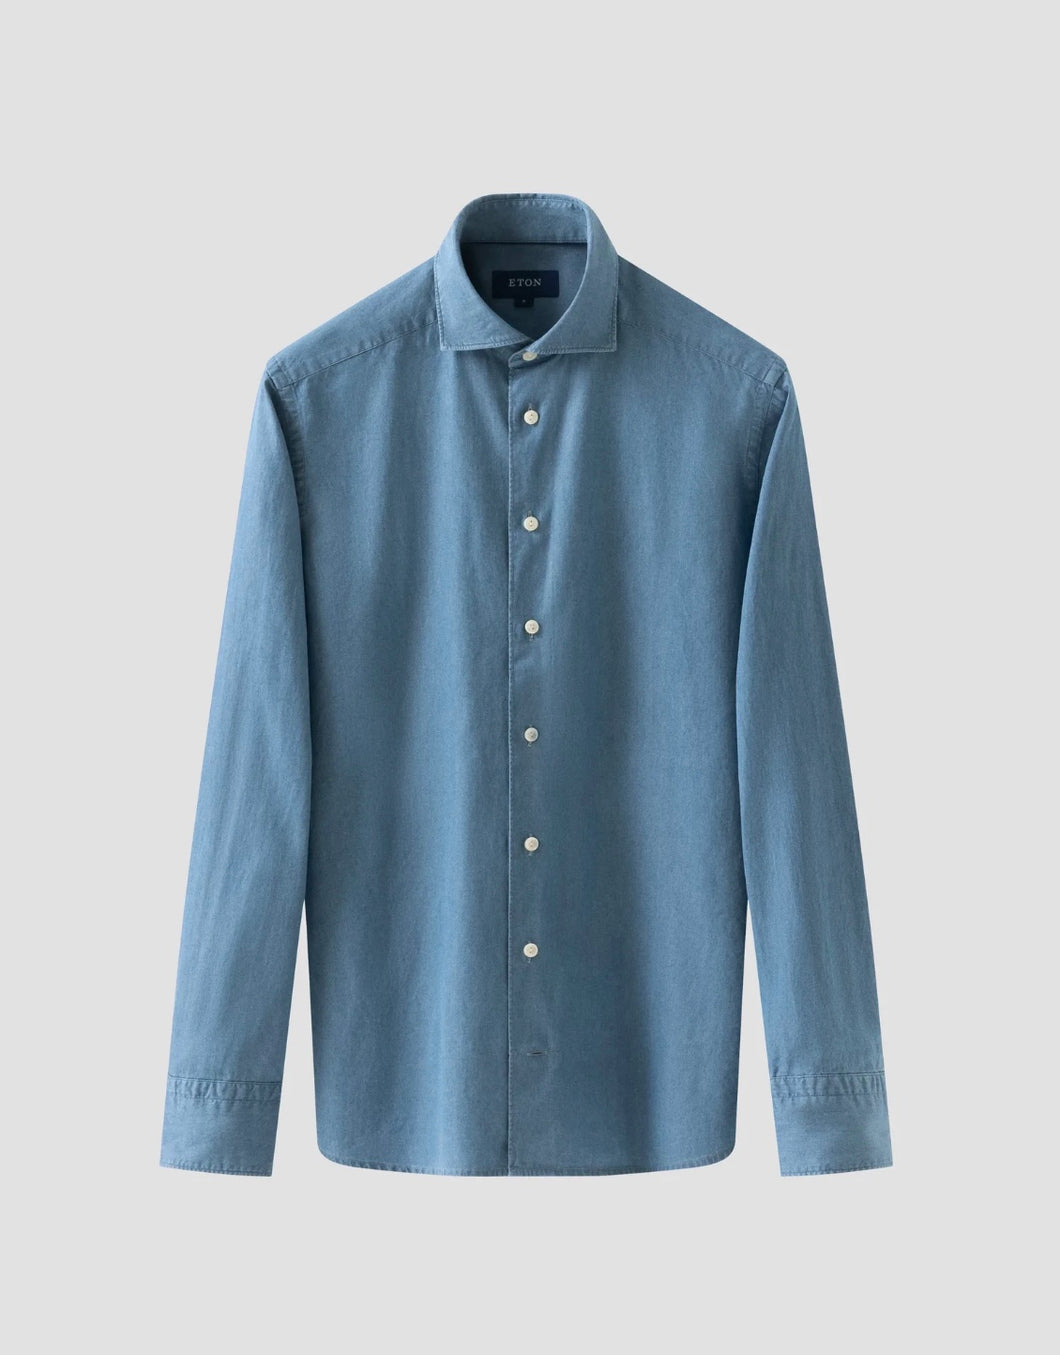 Eton Light Blue Lightweight Denim Shirt (Slim Fit)